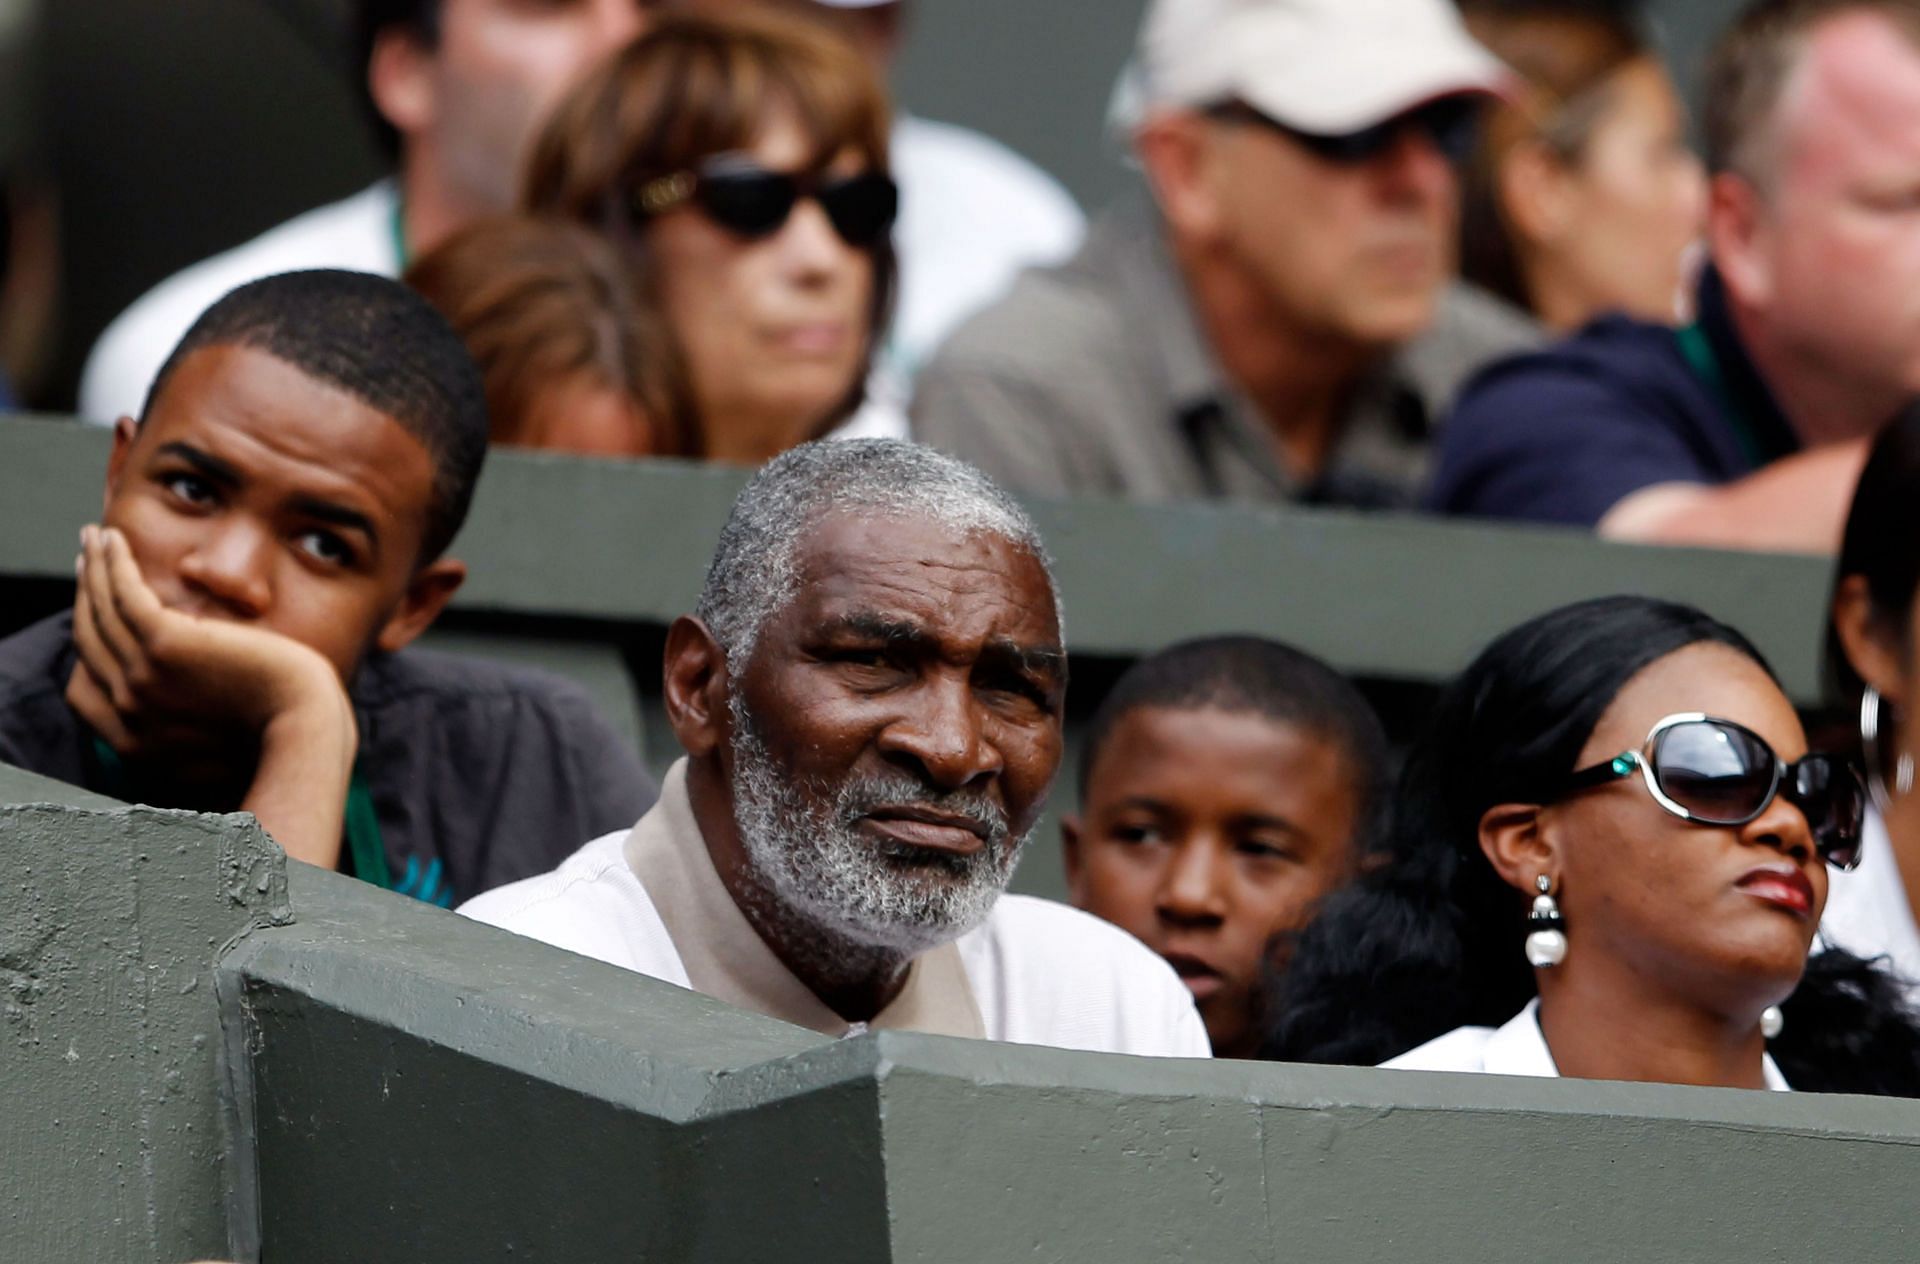 Richard Williams looks on as Venus and Serena play at Wimbledon 2010